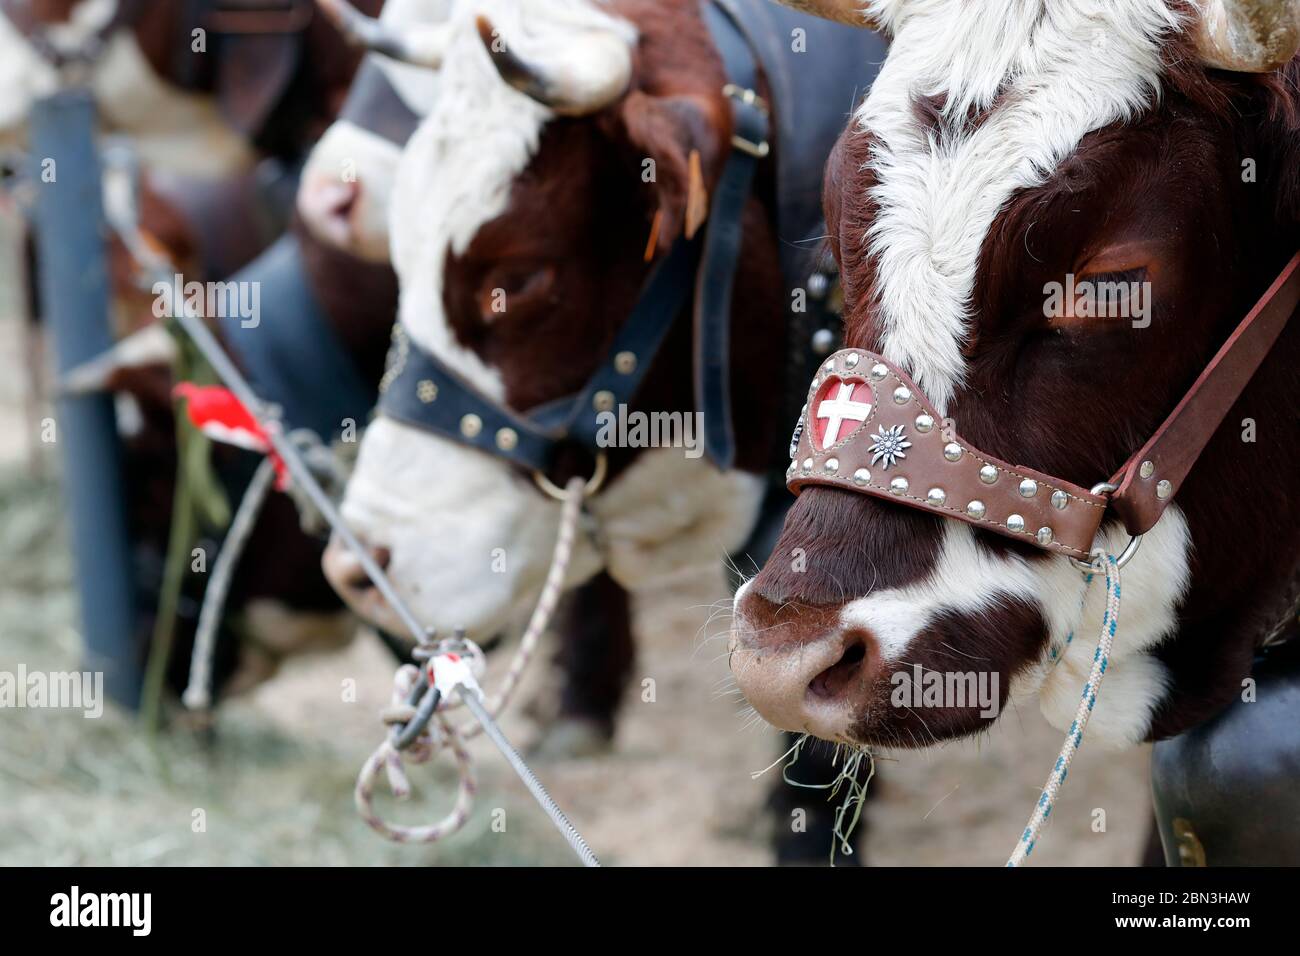 The agriculture fair (Comice Agricole) of Saint-Gervais-les-Bains. Cows. France. Stock Photo